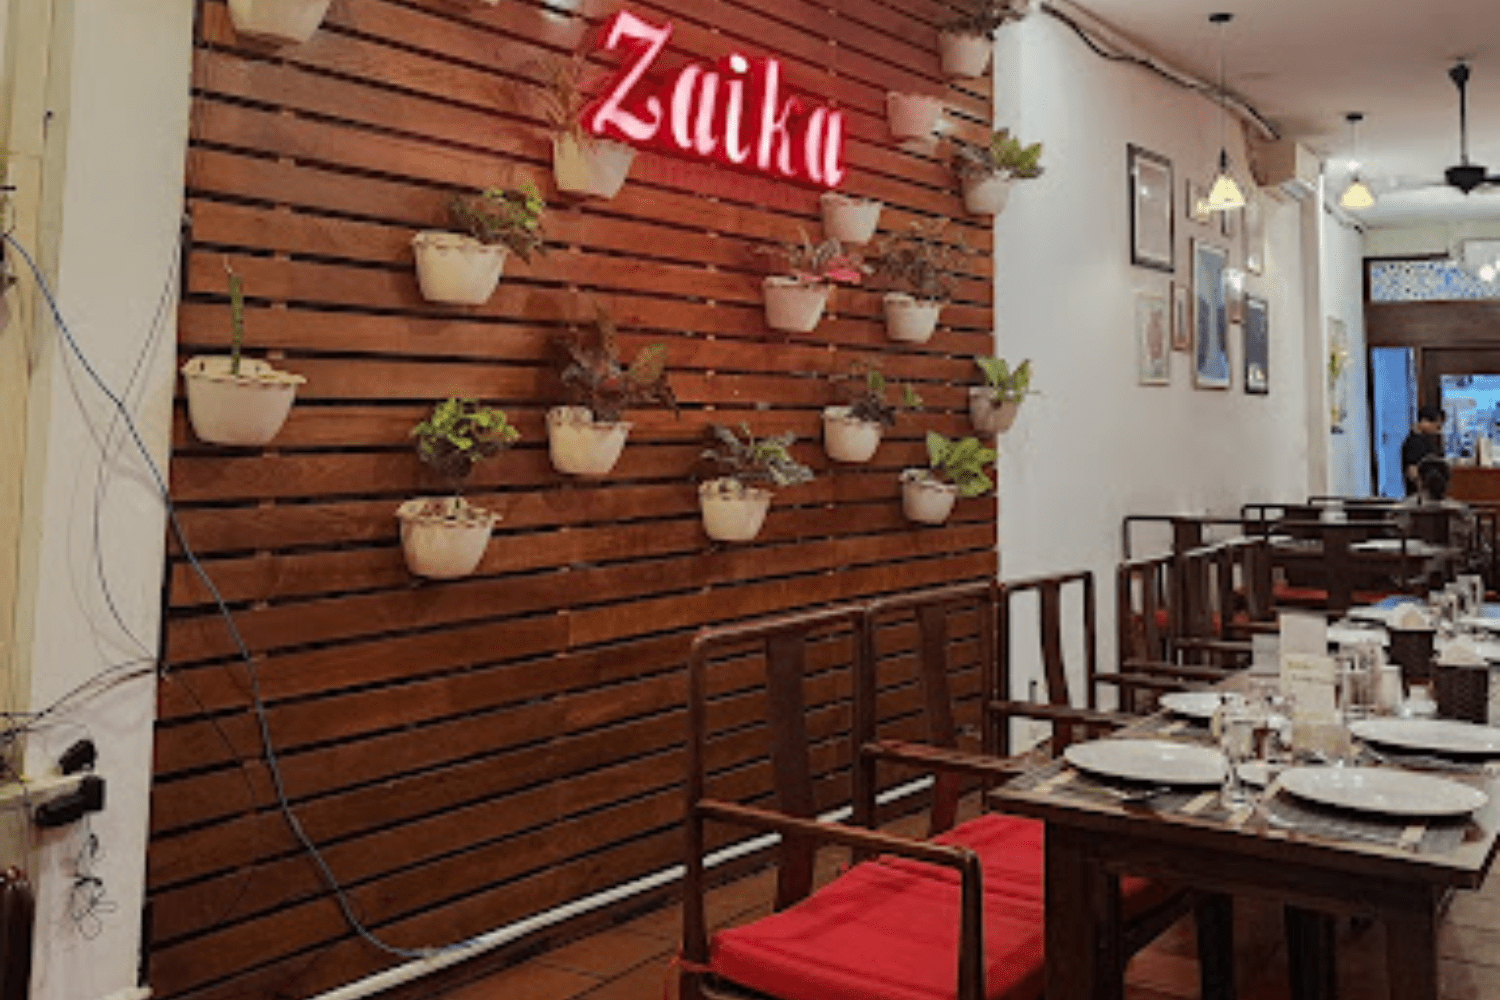 zaika-restaurant-in-vietnam